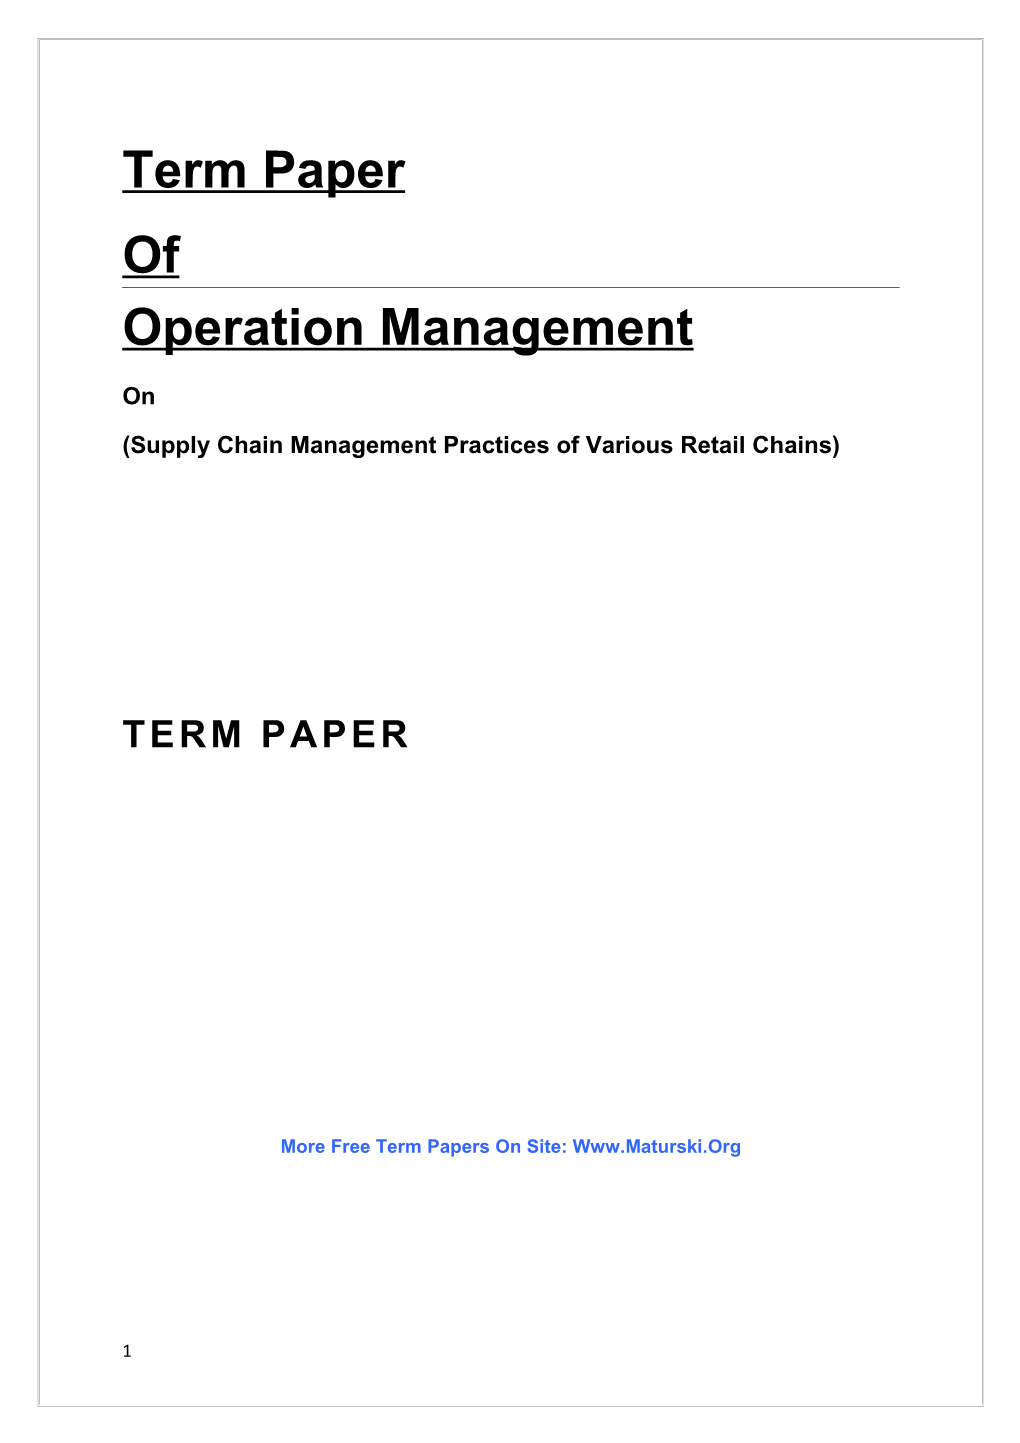 Supply Chain Management s5